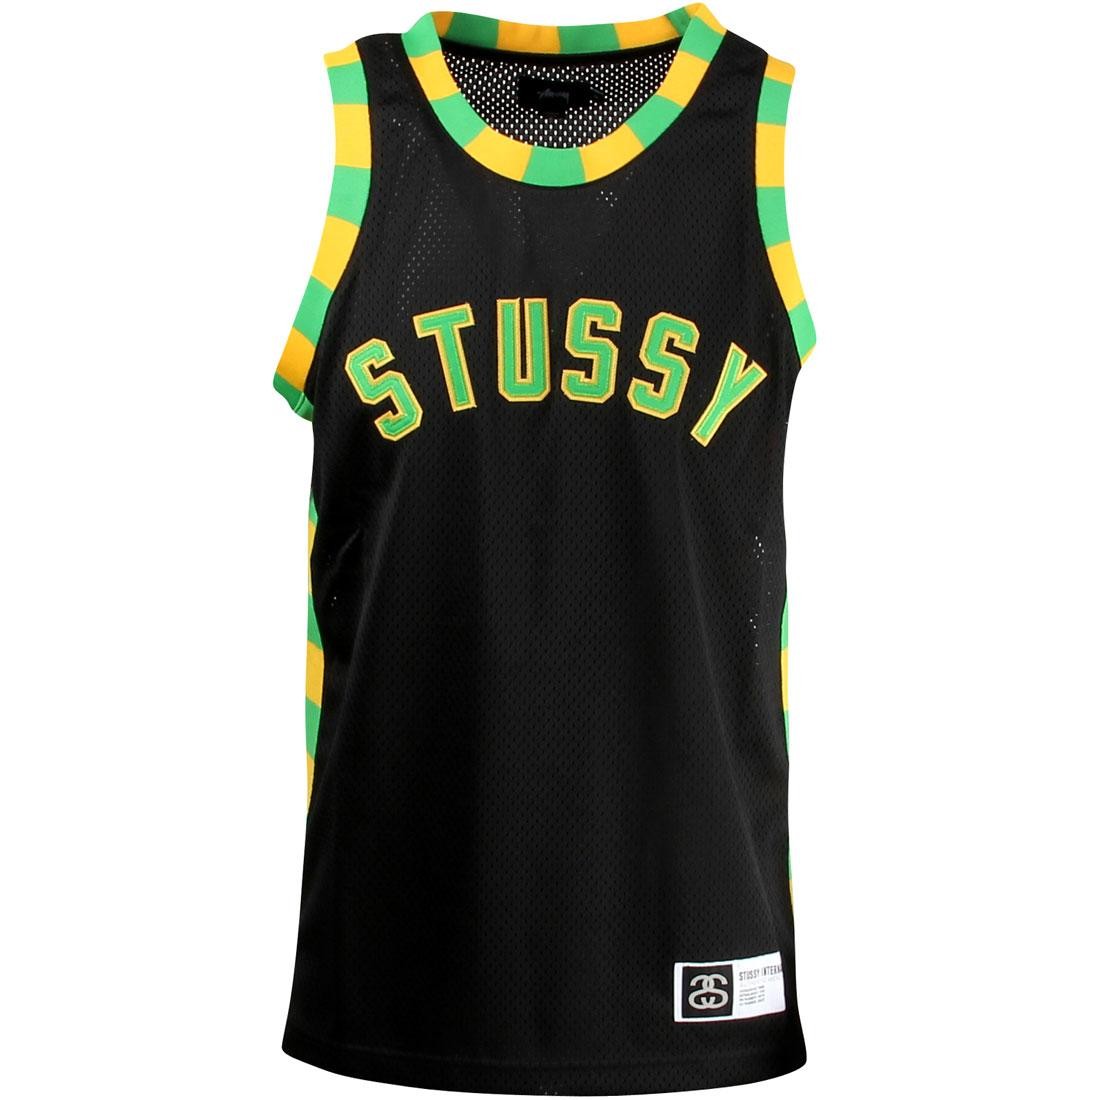 stussy jersey